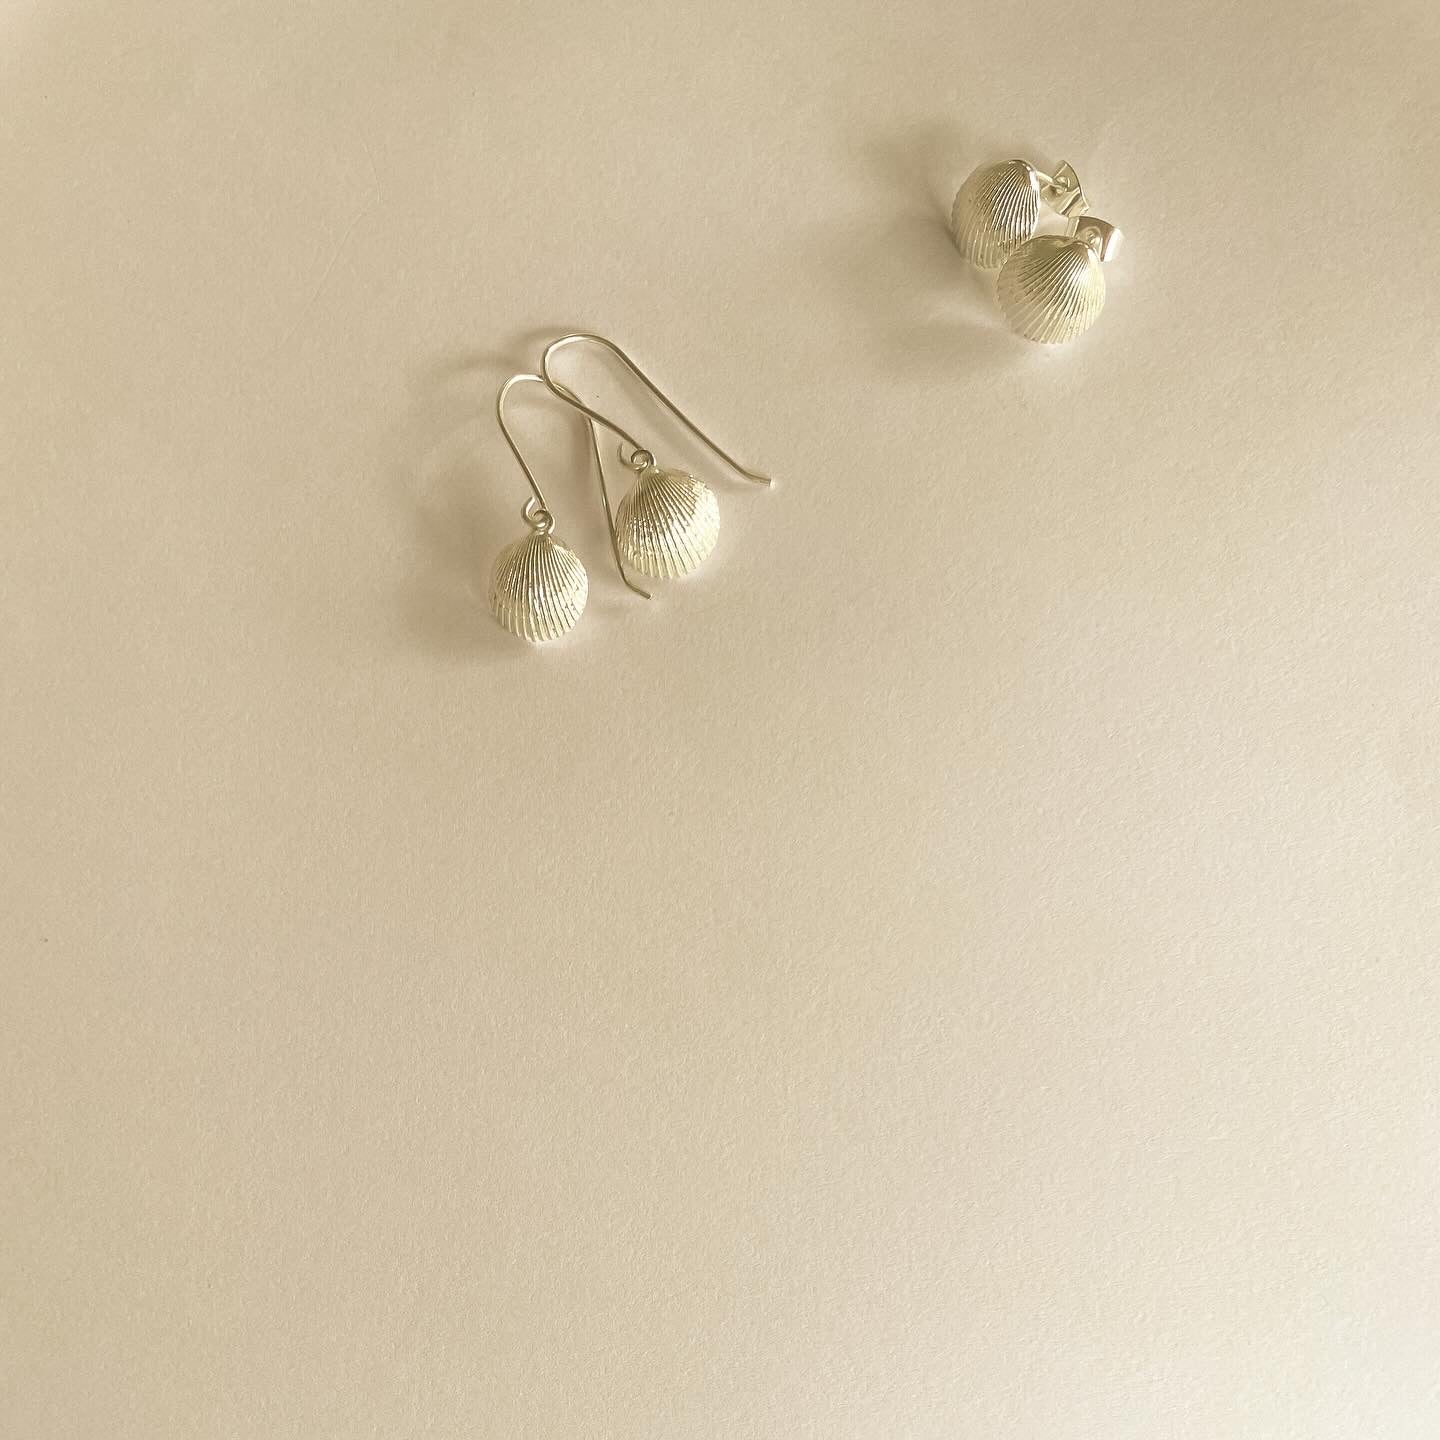 Tiny Livi earrings